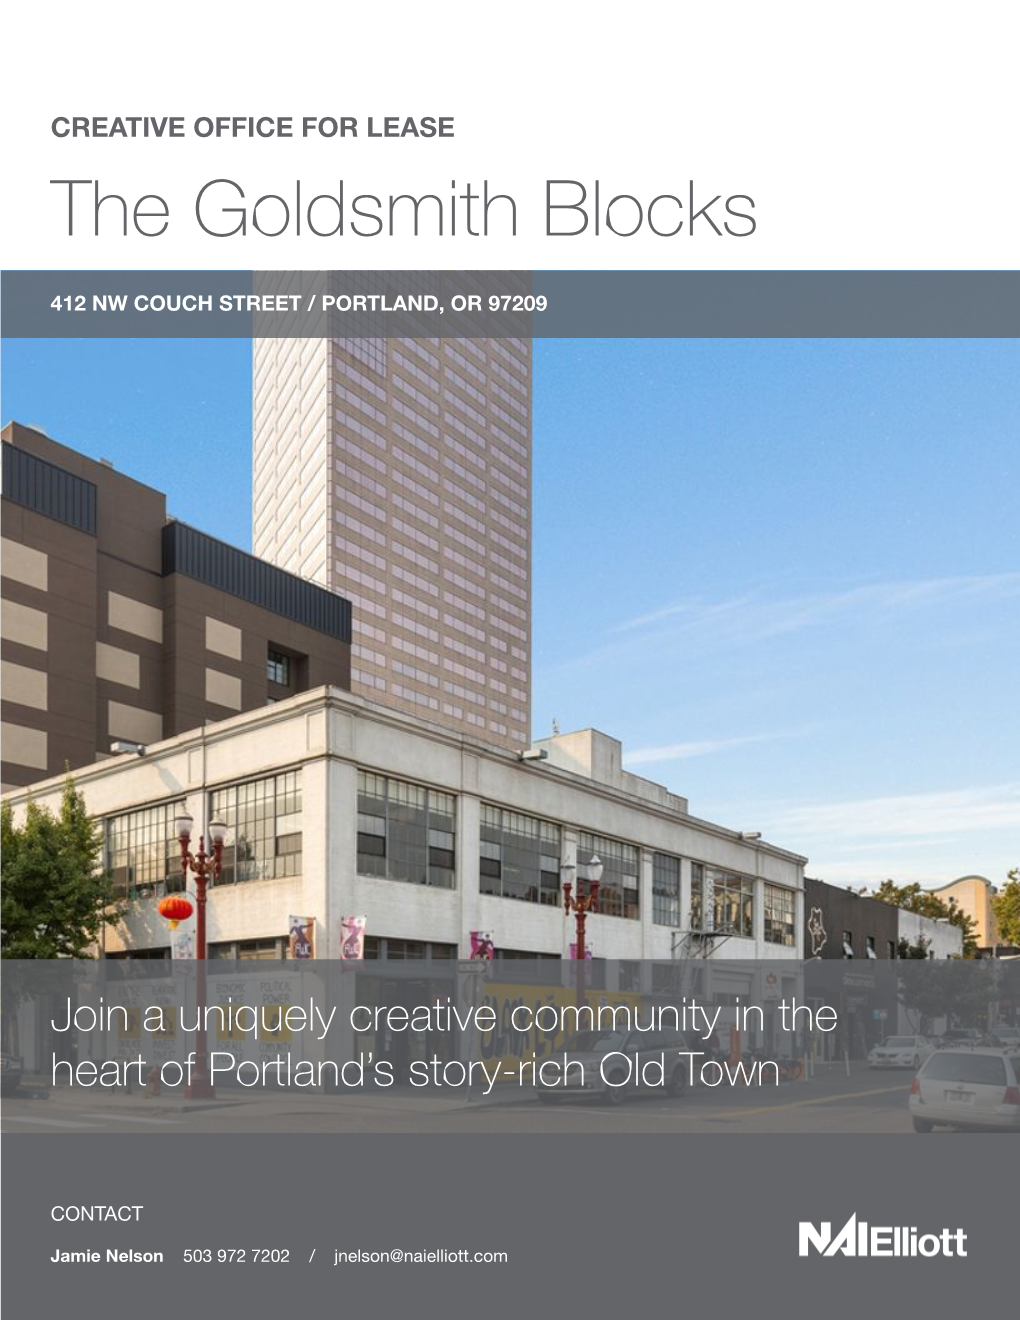 The Goldsmith Blocks